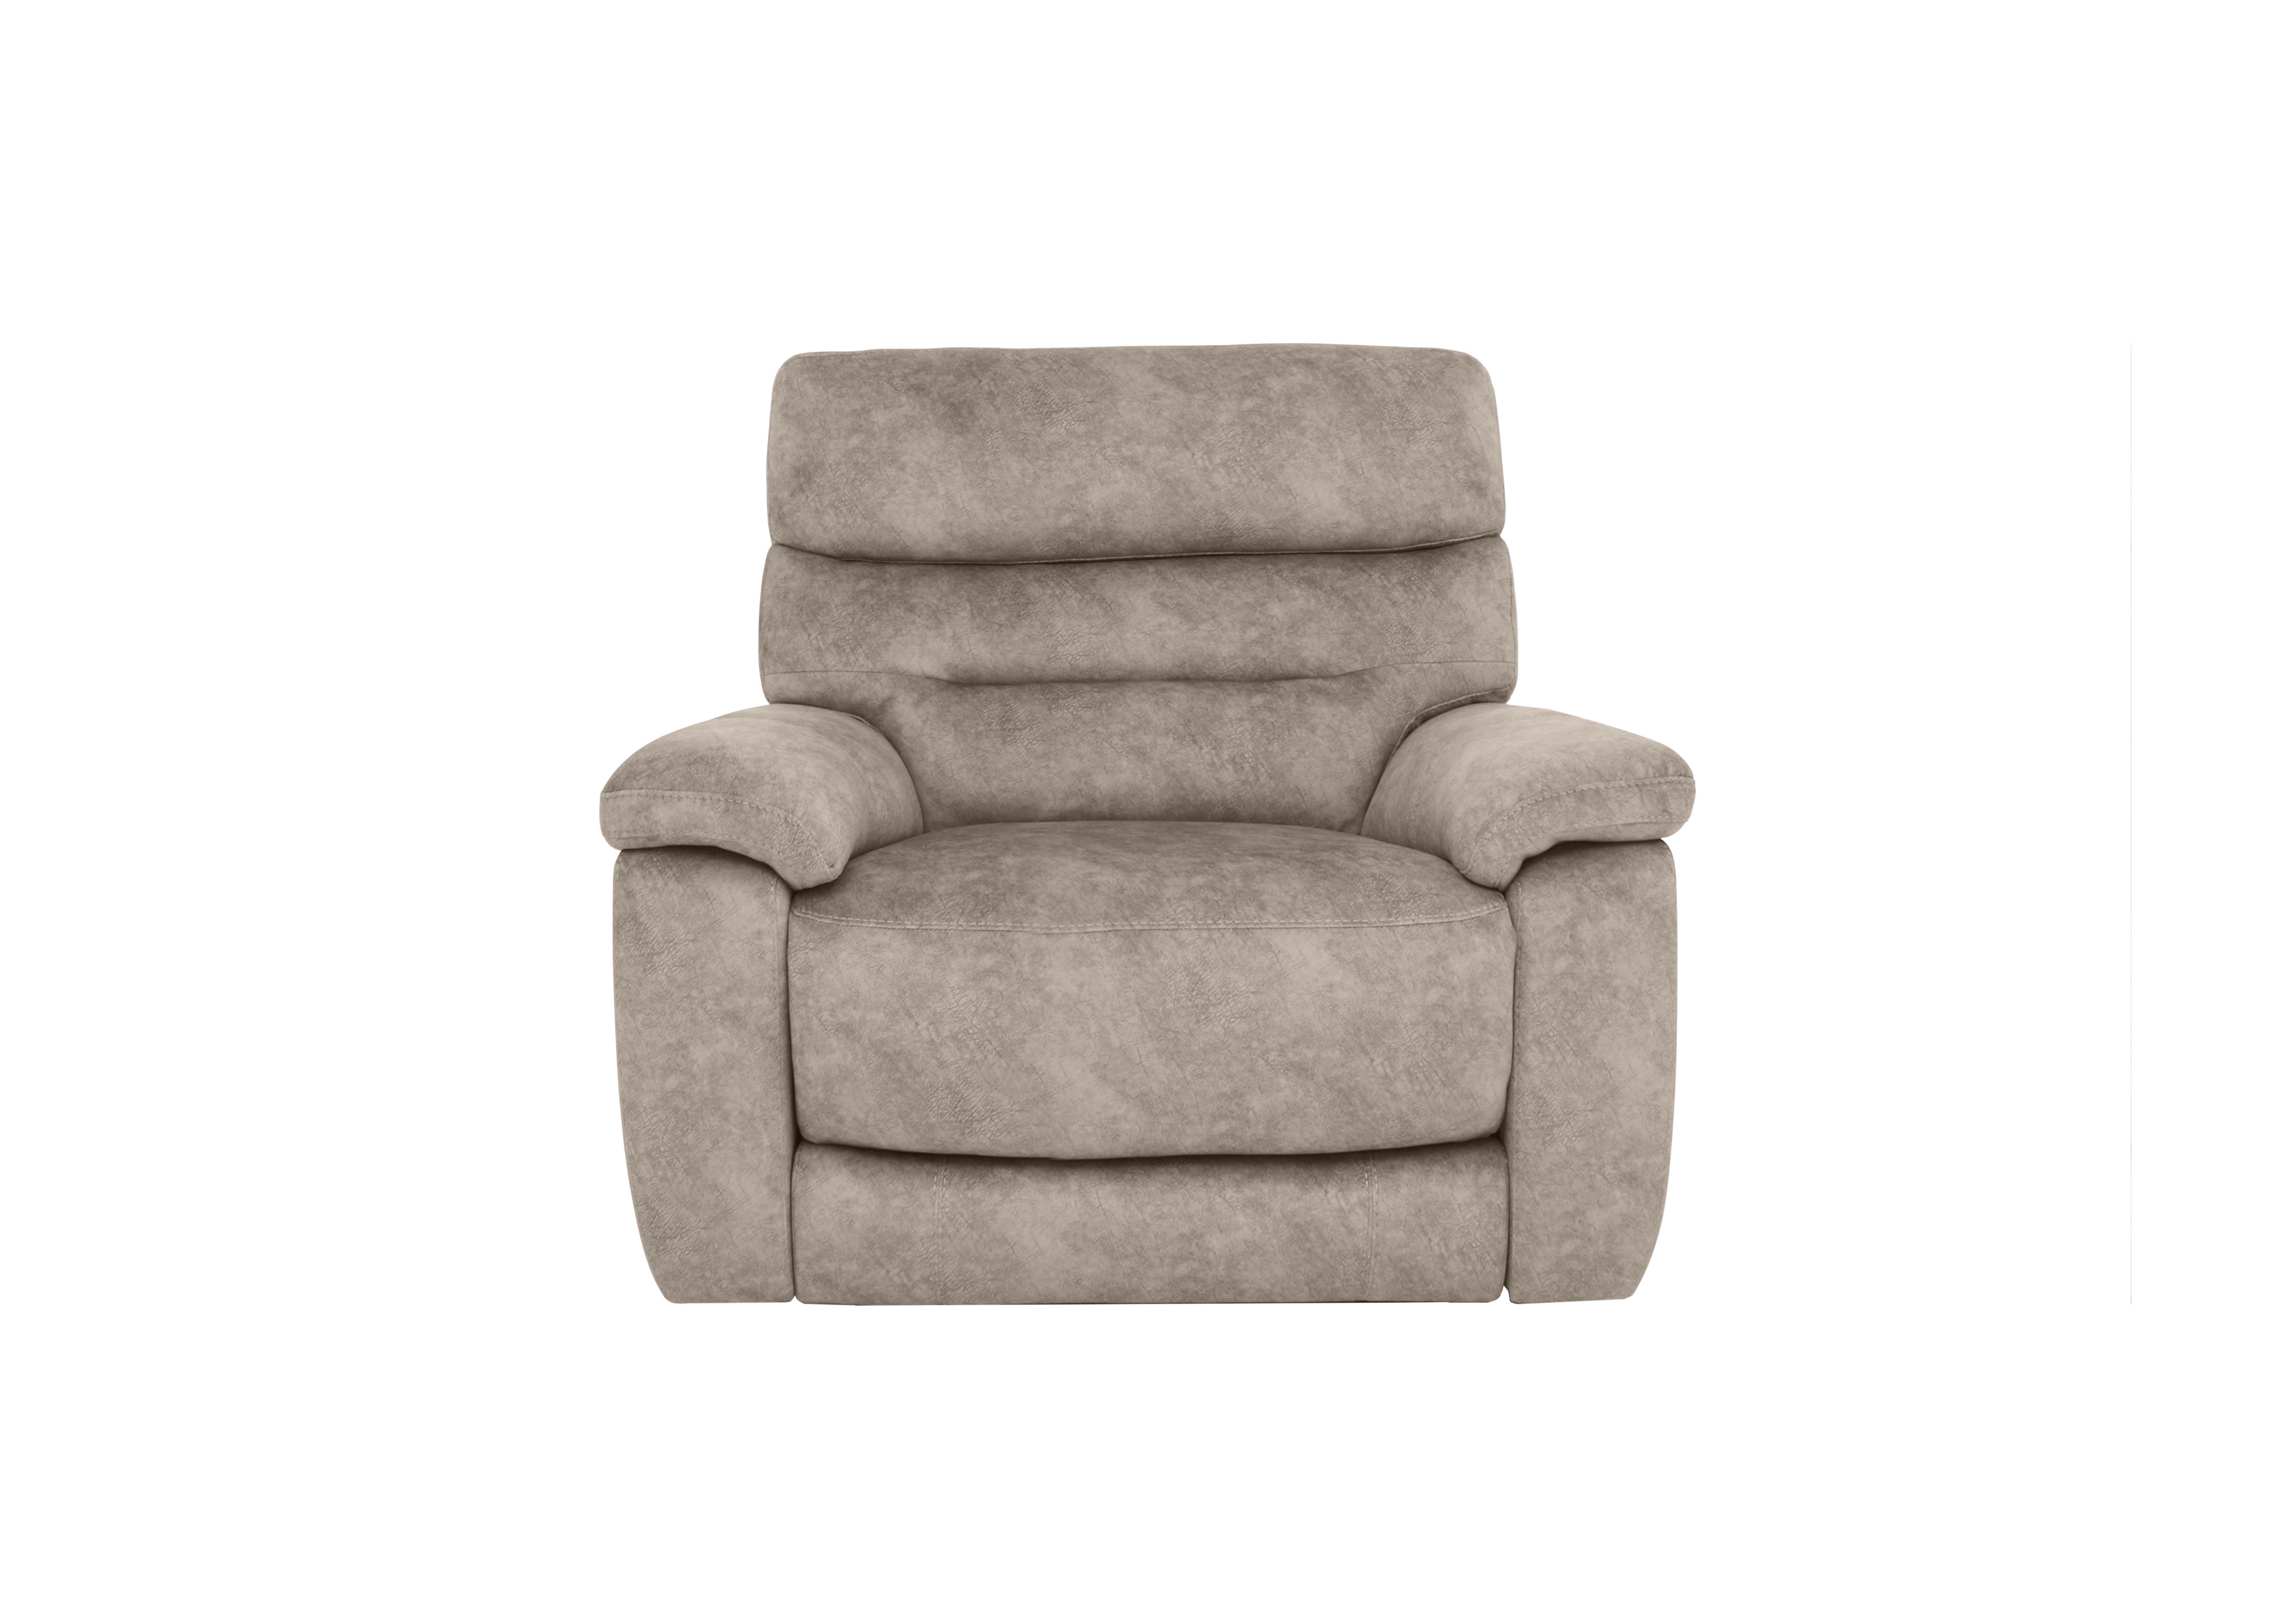 Nimbus Fabric Chair in Bfa-Bnn-R29 Mink on Furniture Village